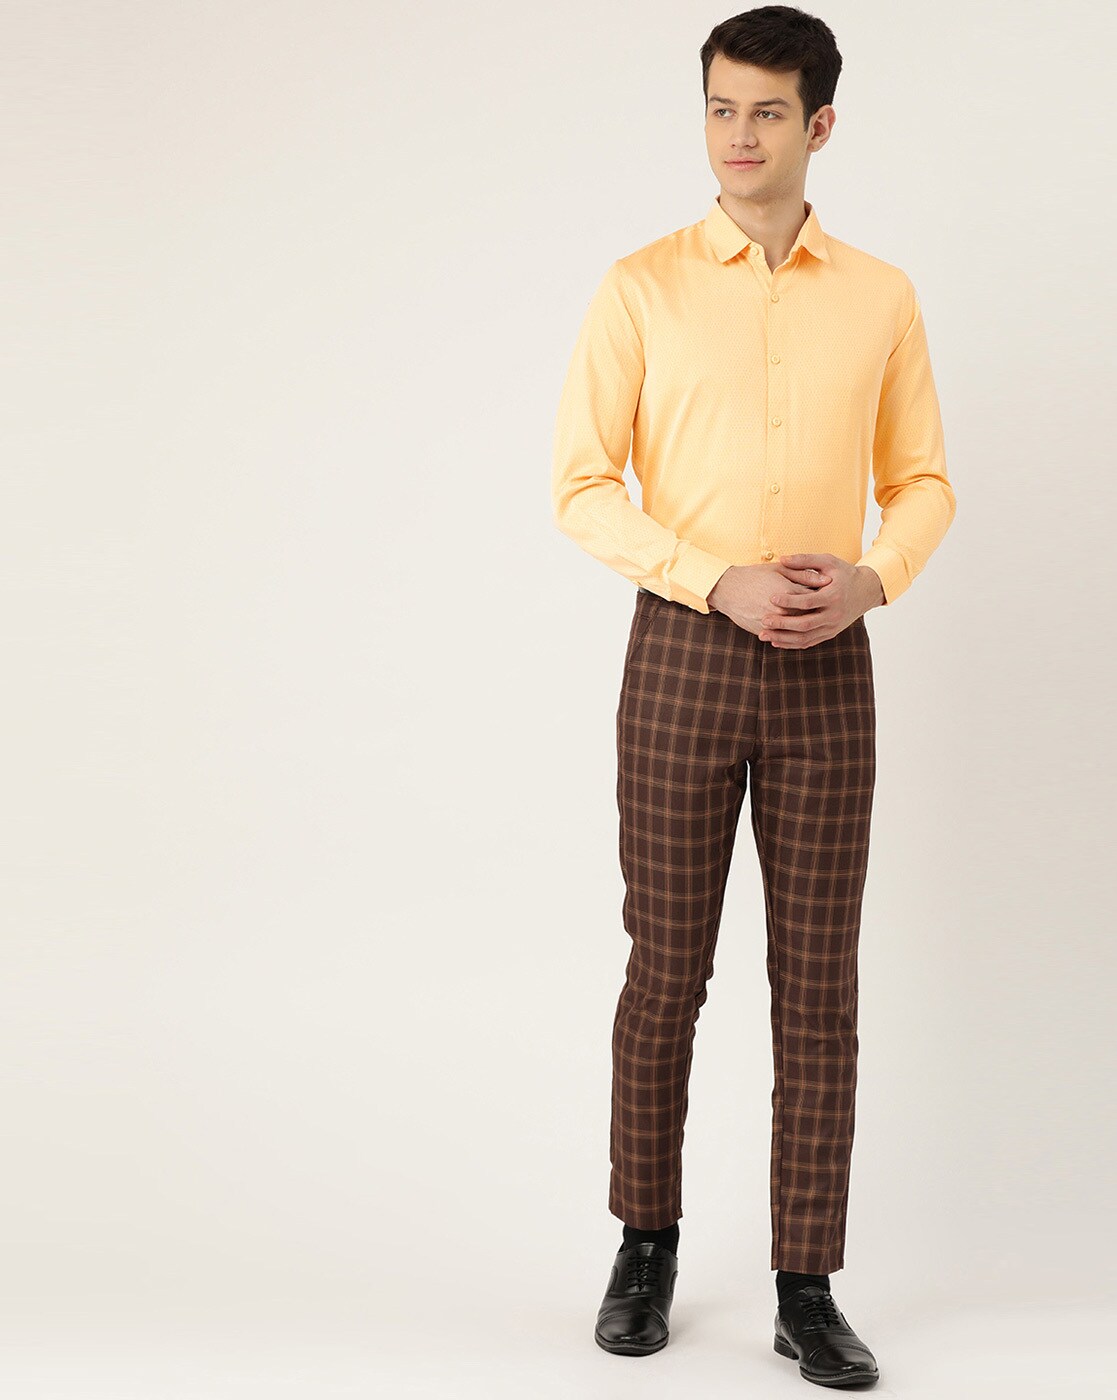 Buy Yellow Tshirts for Men by Gant Online | Ajio.com